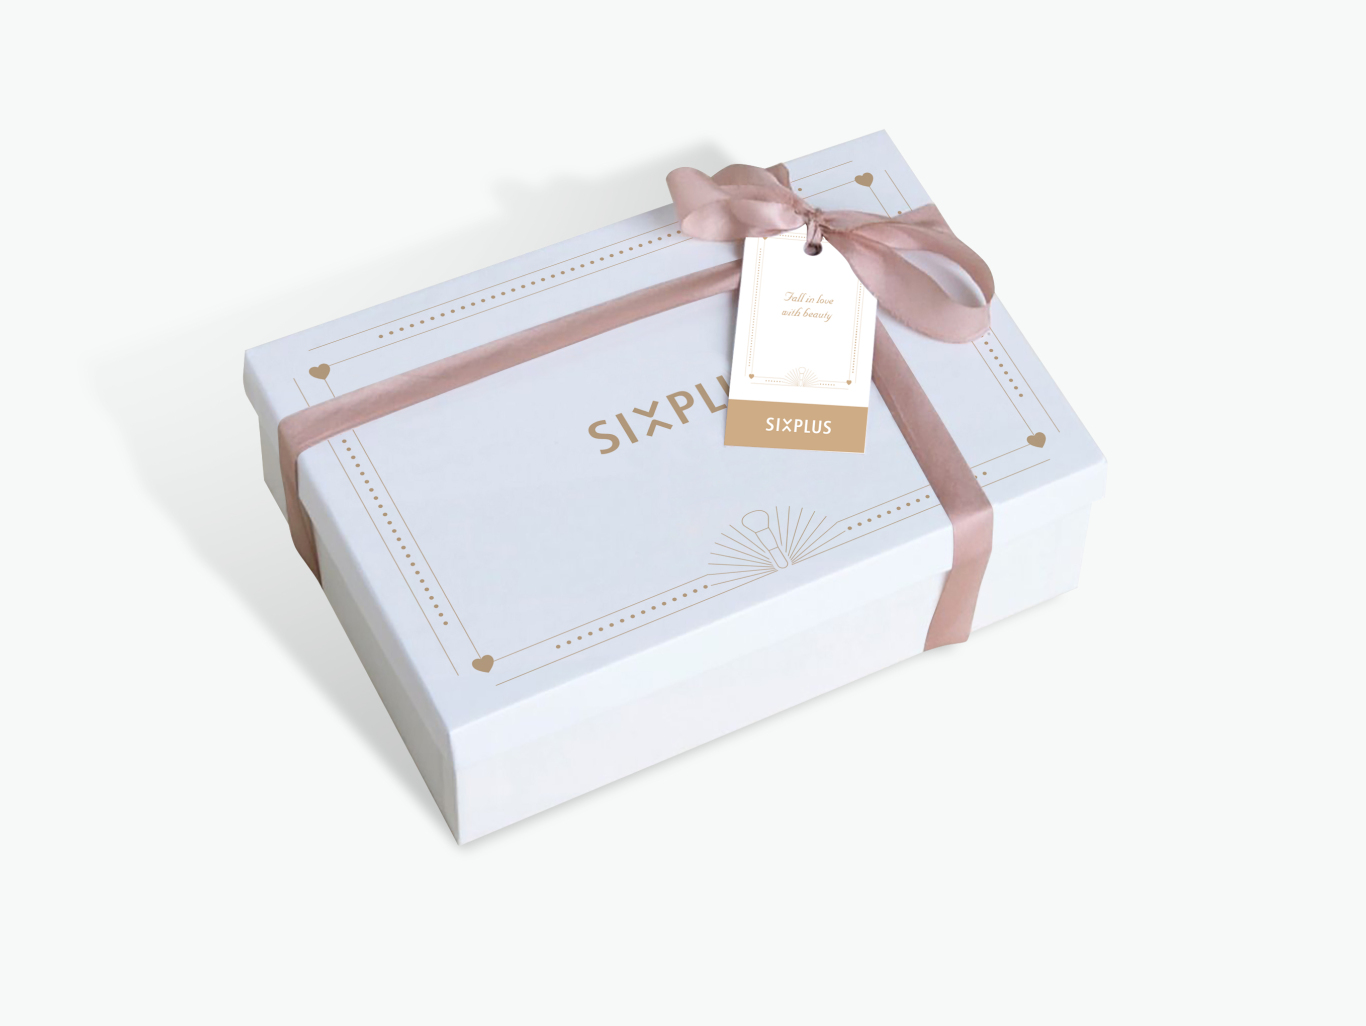 SIXPLUS 美妆产品礼盒包装设计图1